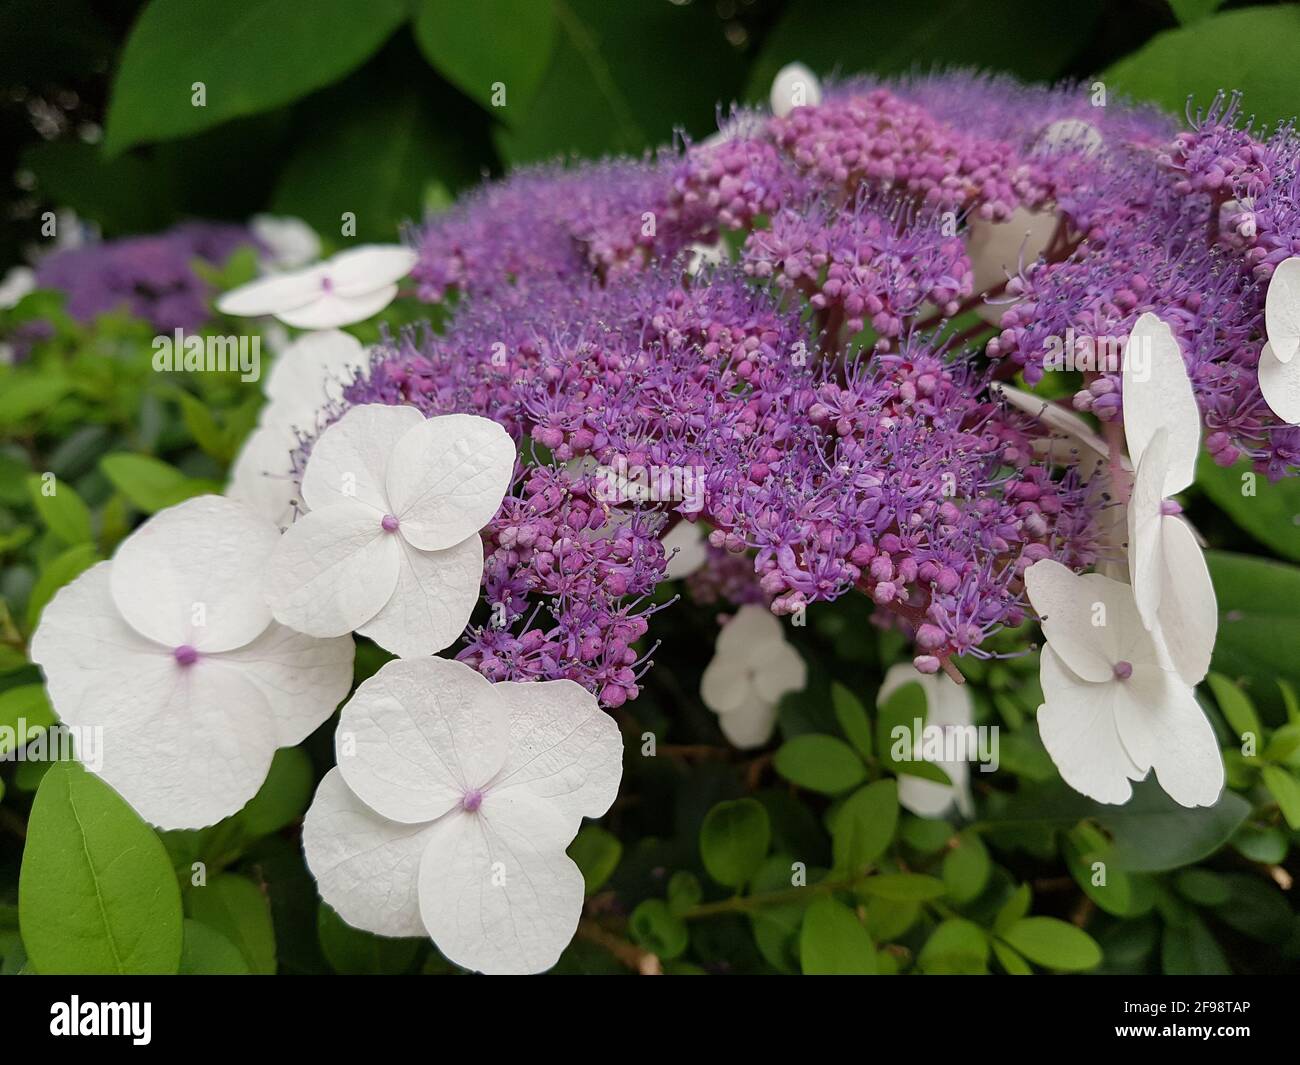 Hydrangea flower, close-up Stock Photo